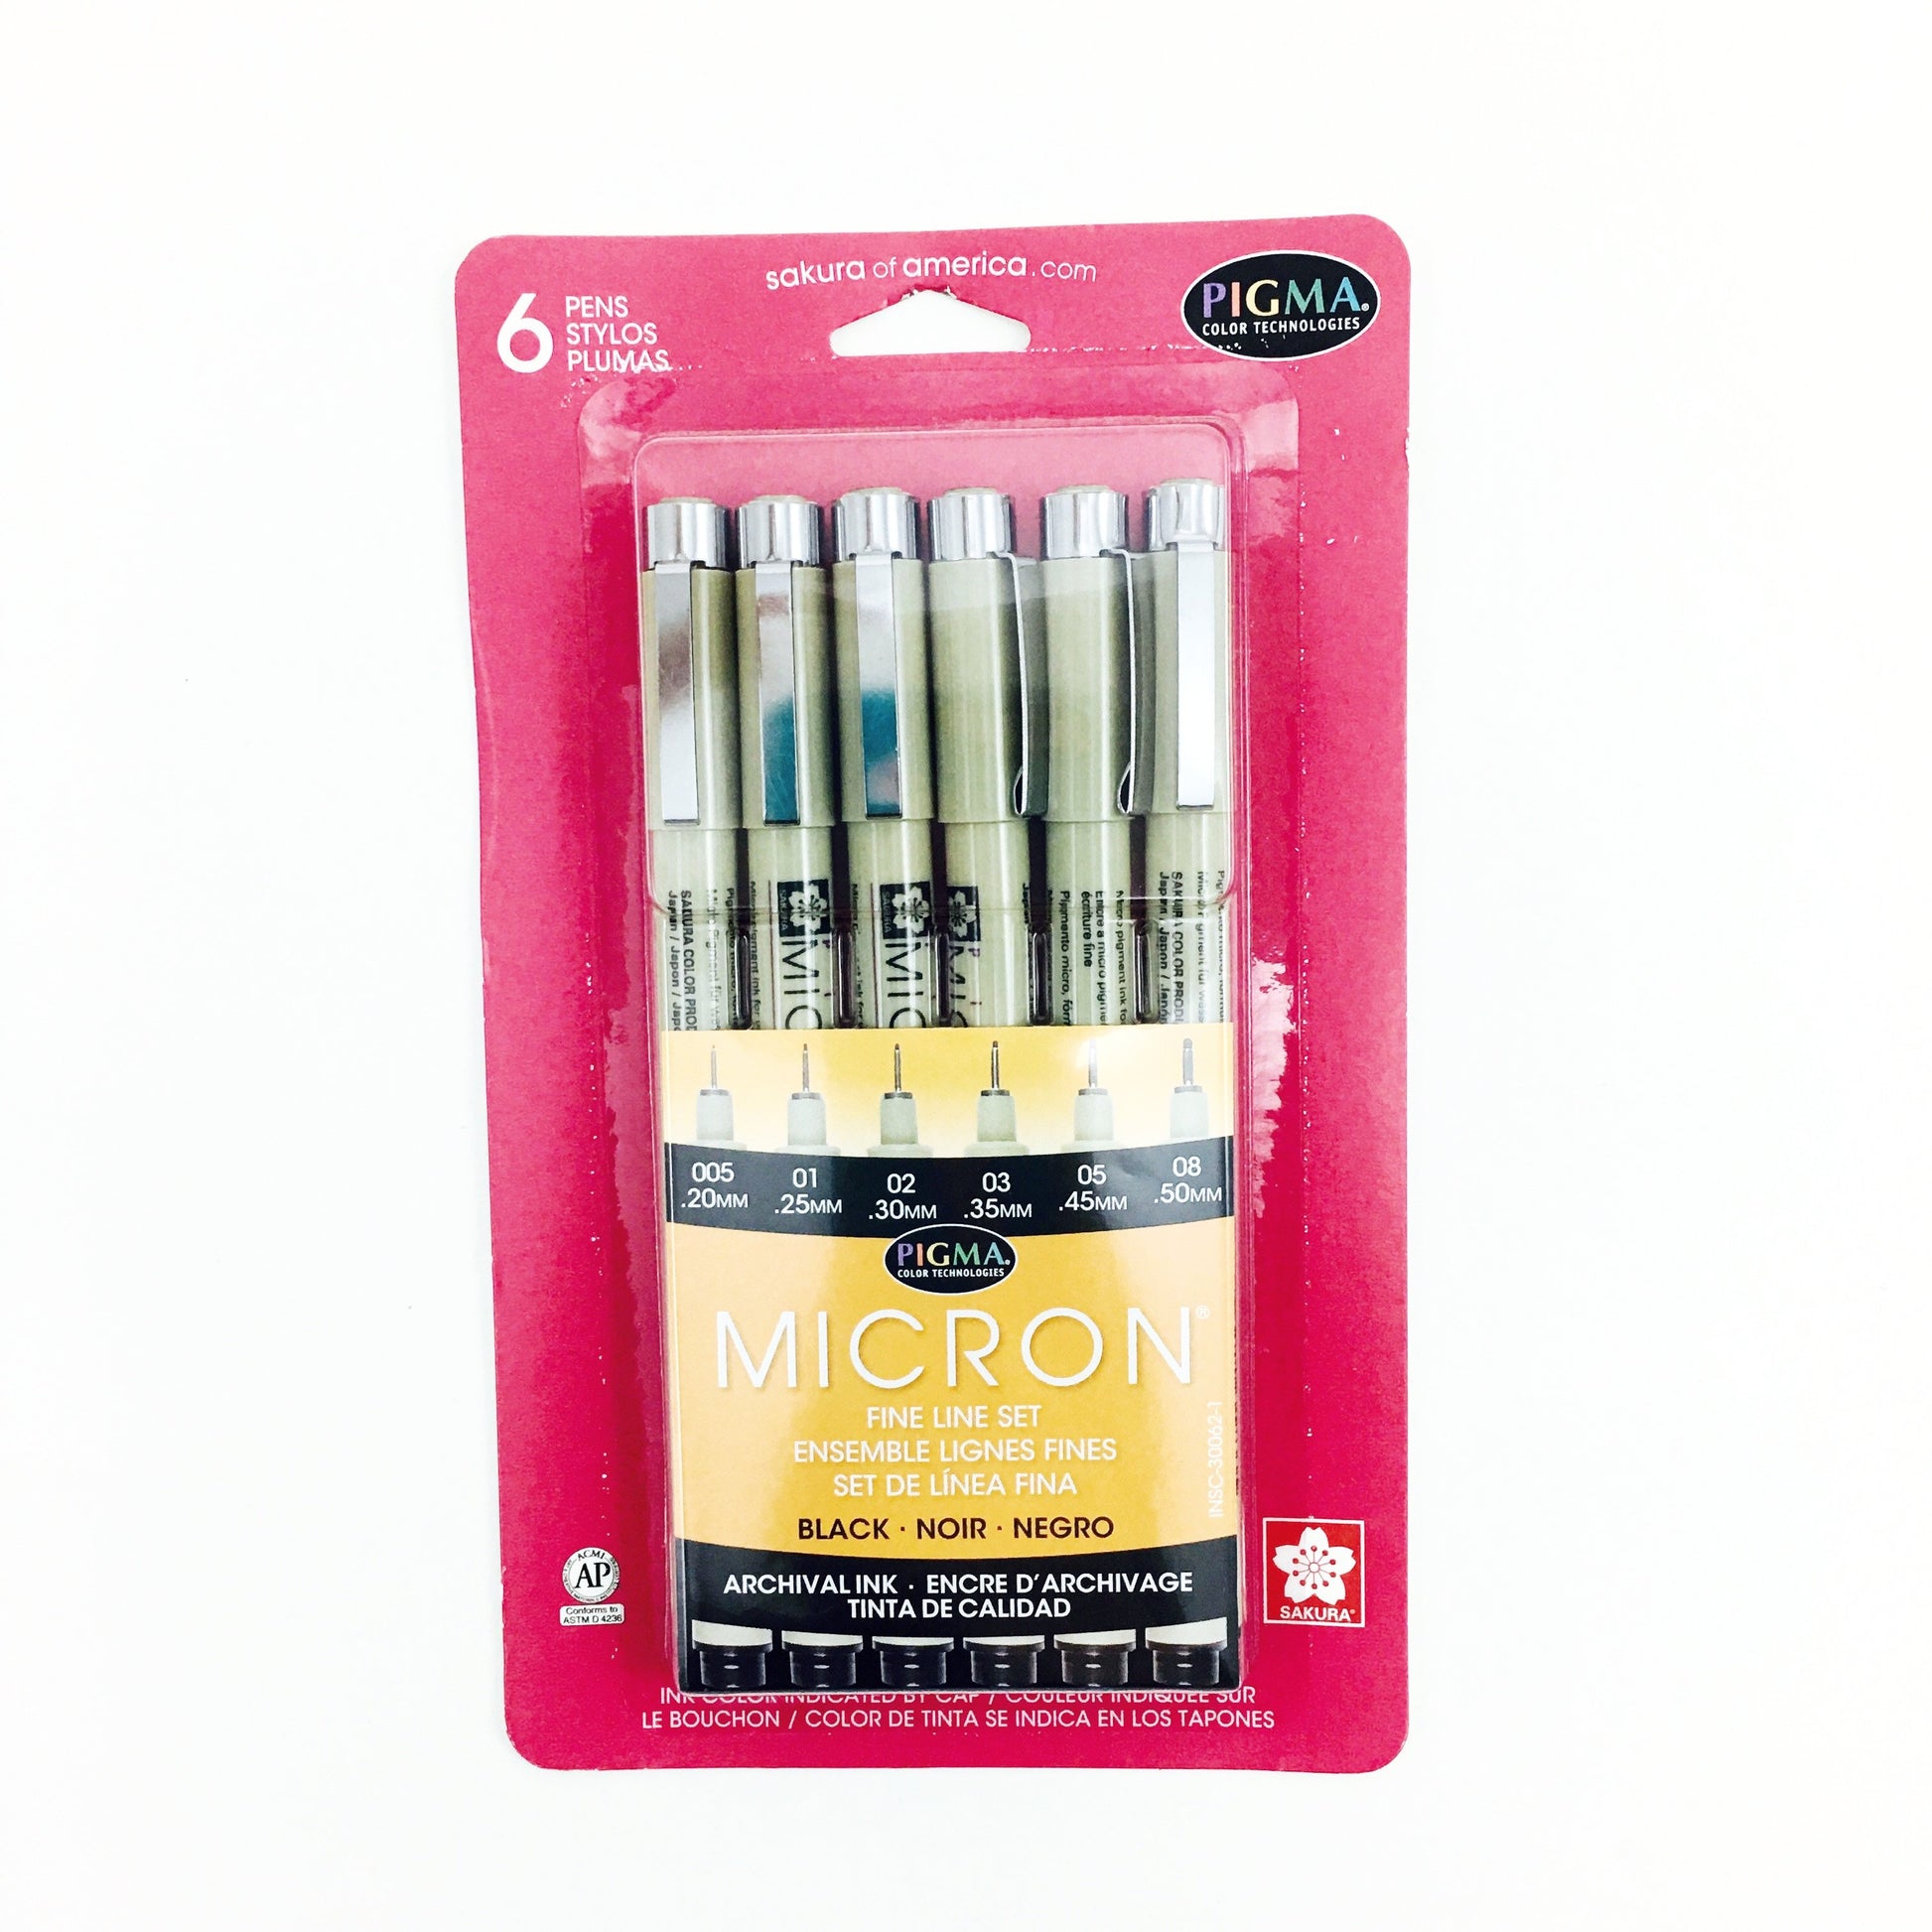 Pigma Micron Pen Sets - Black - 6 pack (005, 01, 02, 03, 05, 08) by Sakura - K. A. Artist Shop